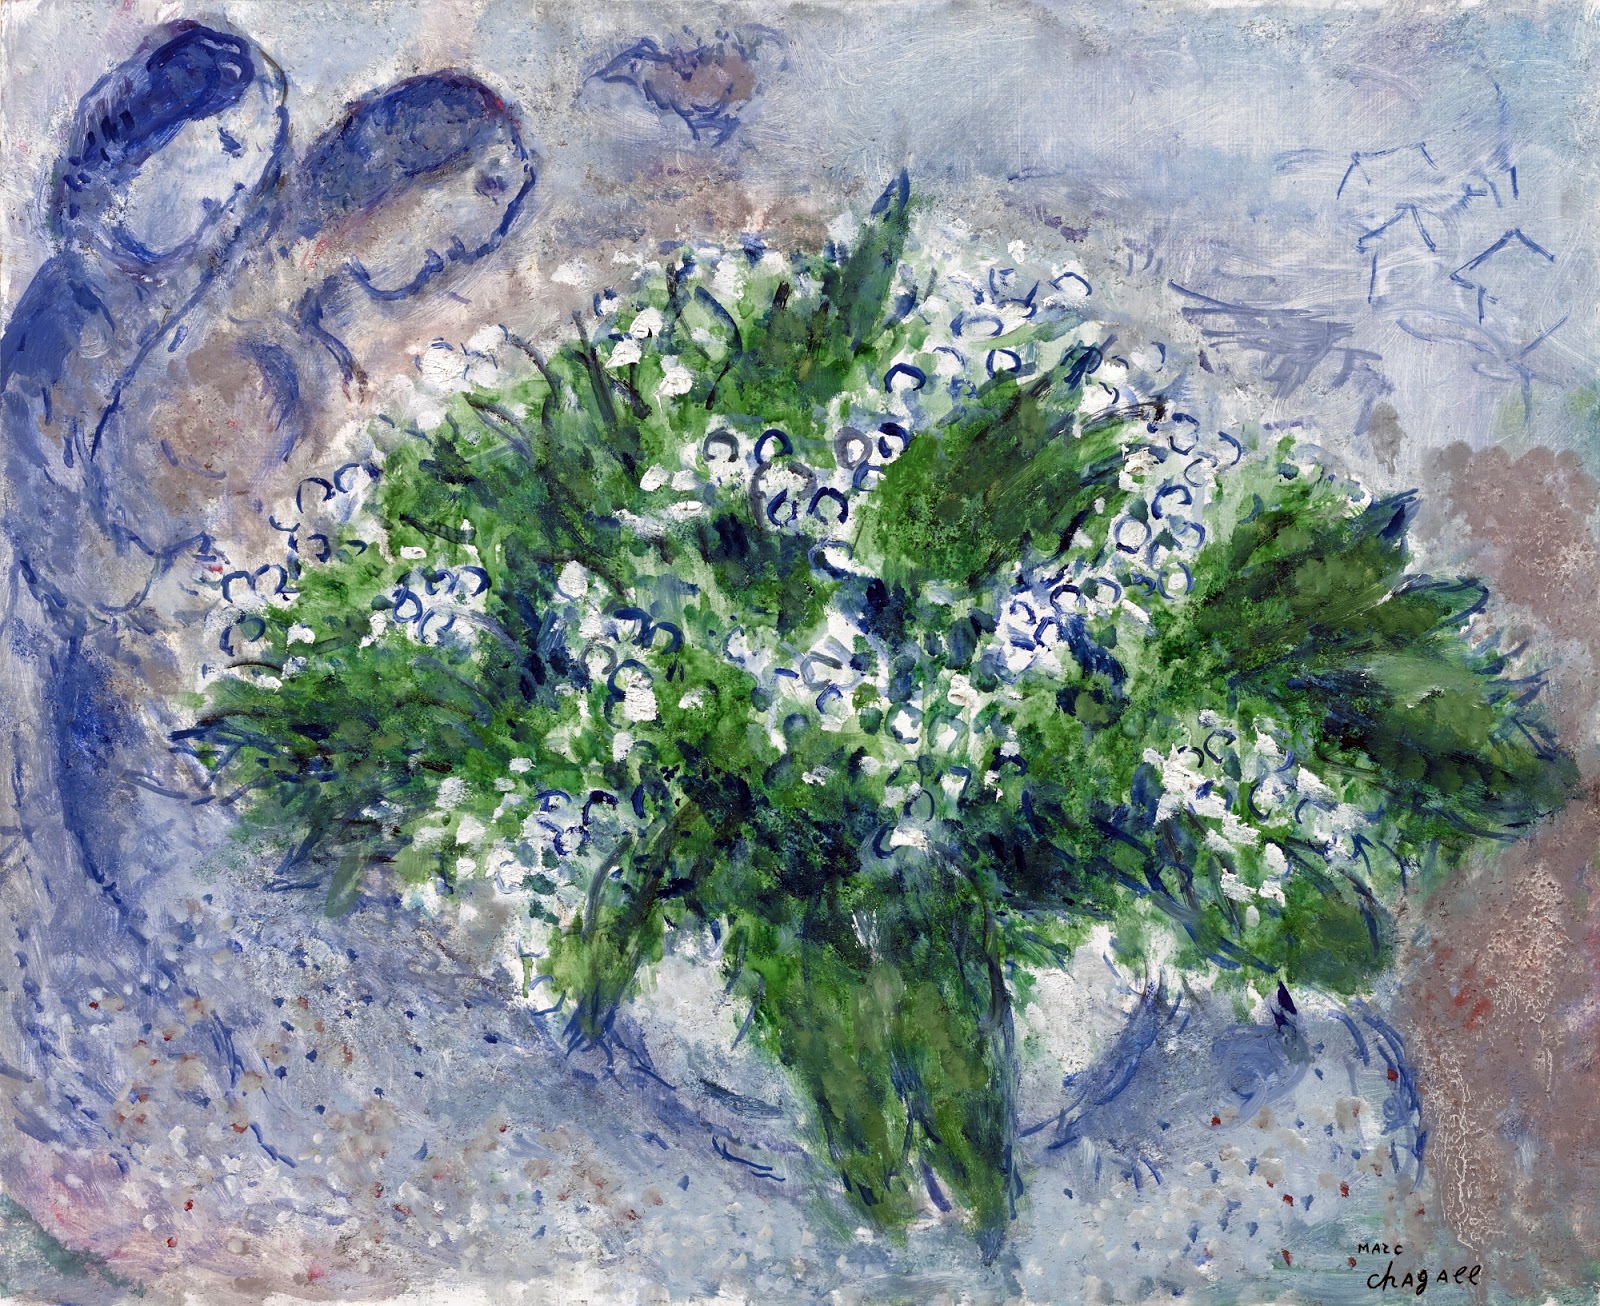 Marc+Chagall-1887-1985 (257).jpg